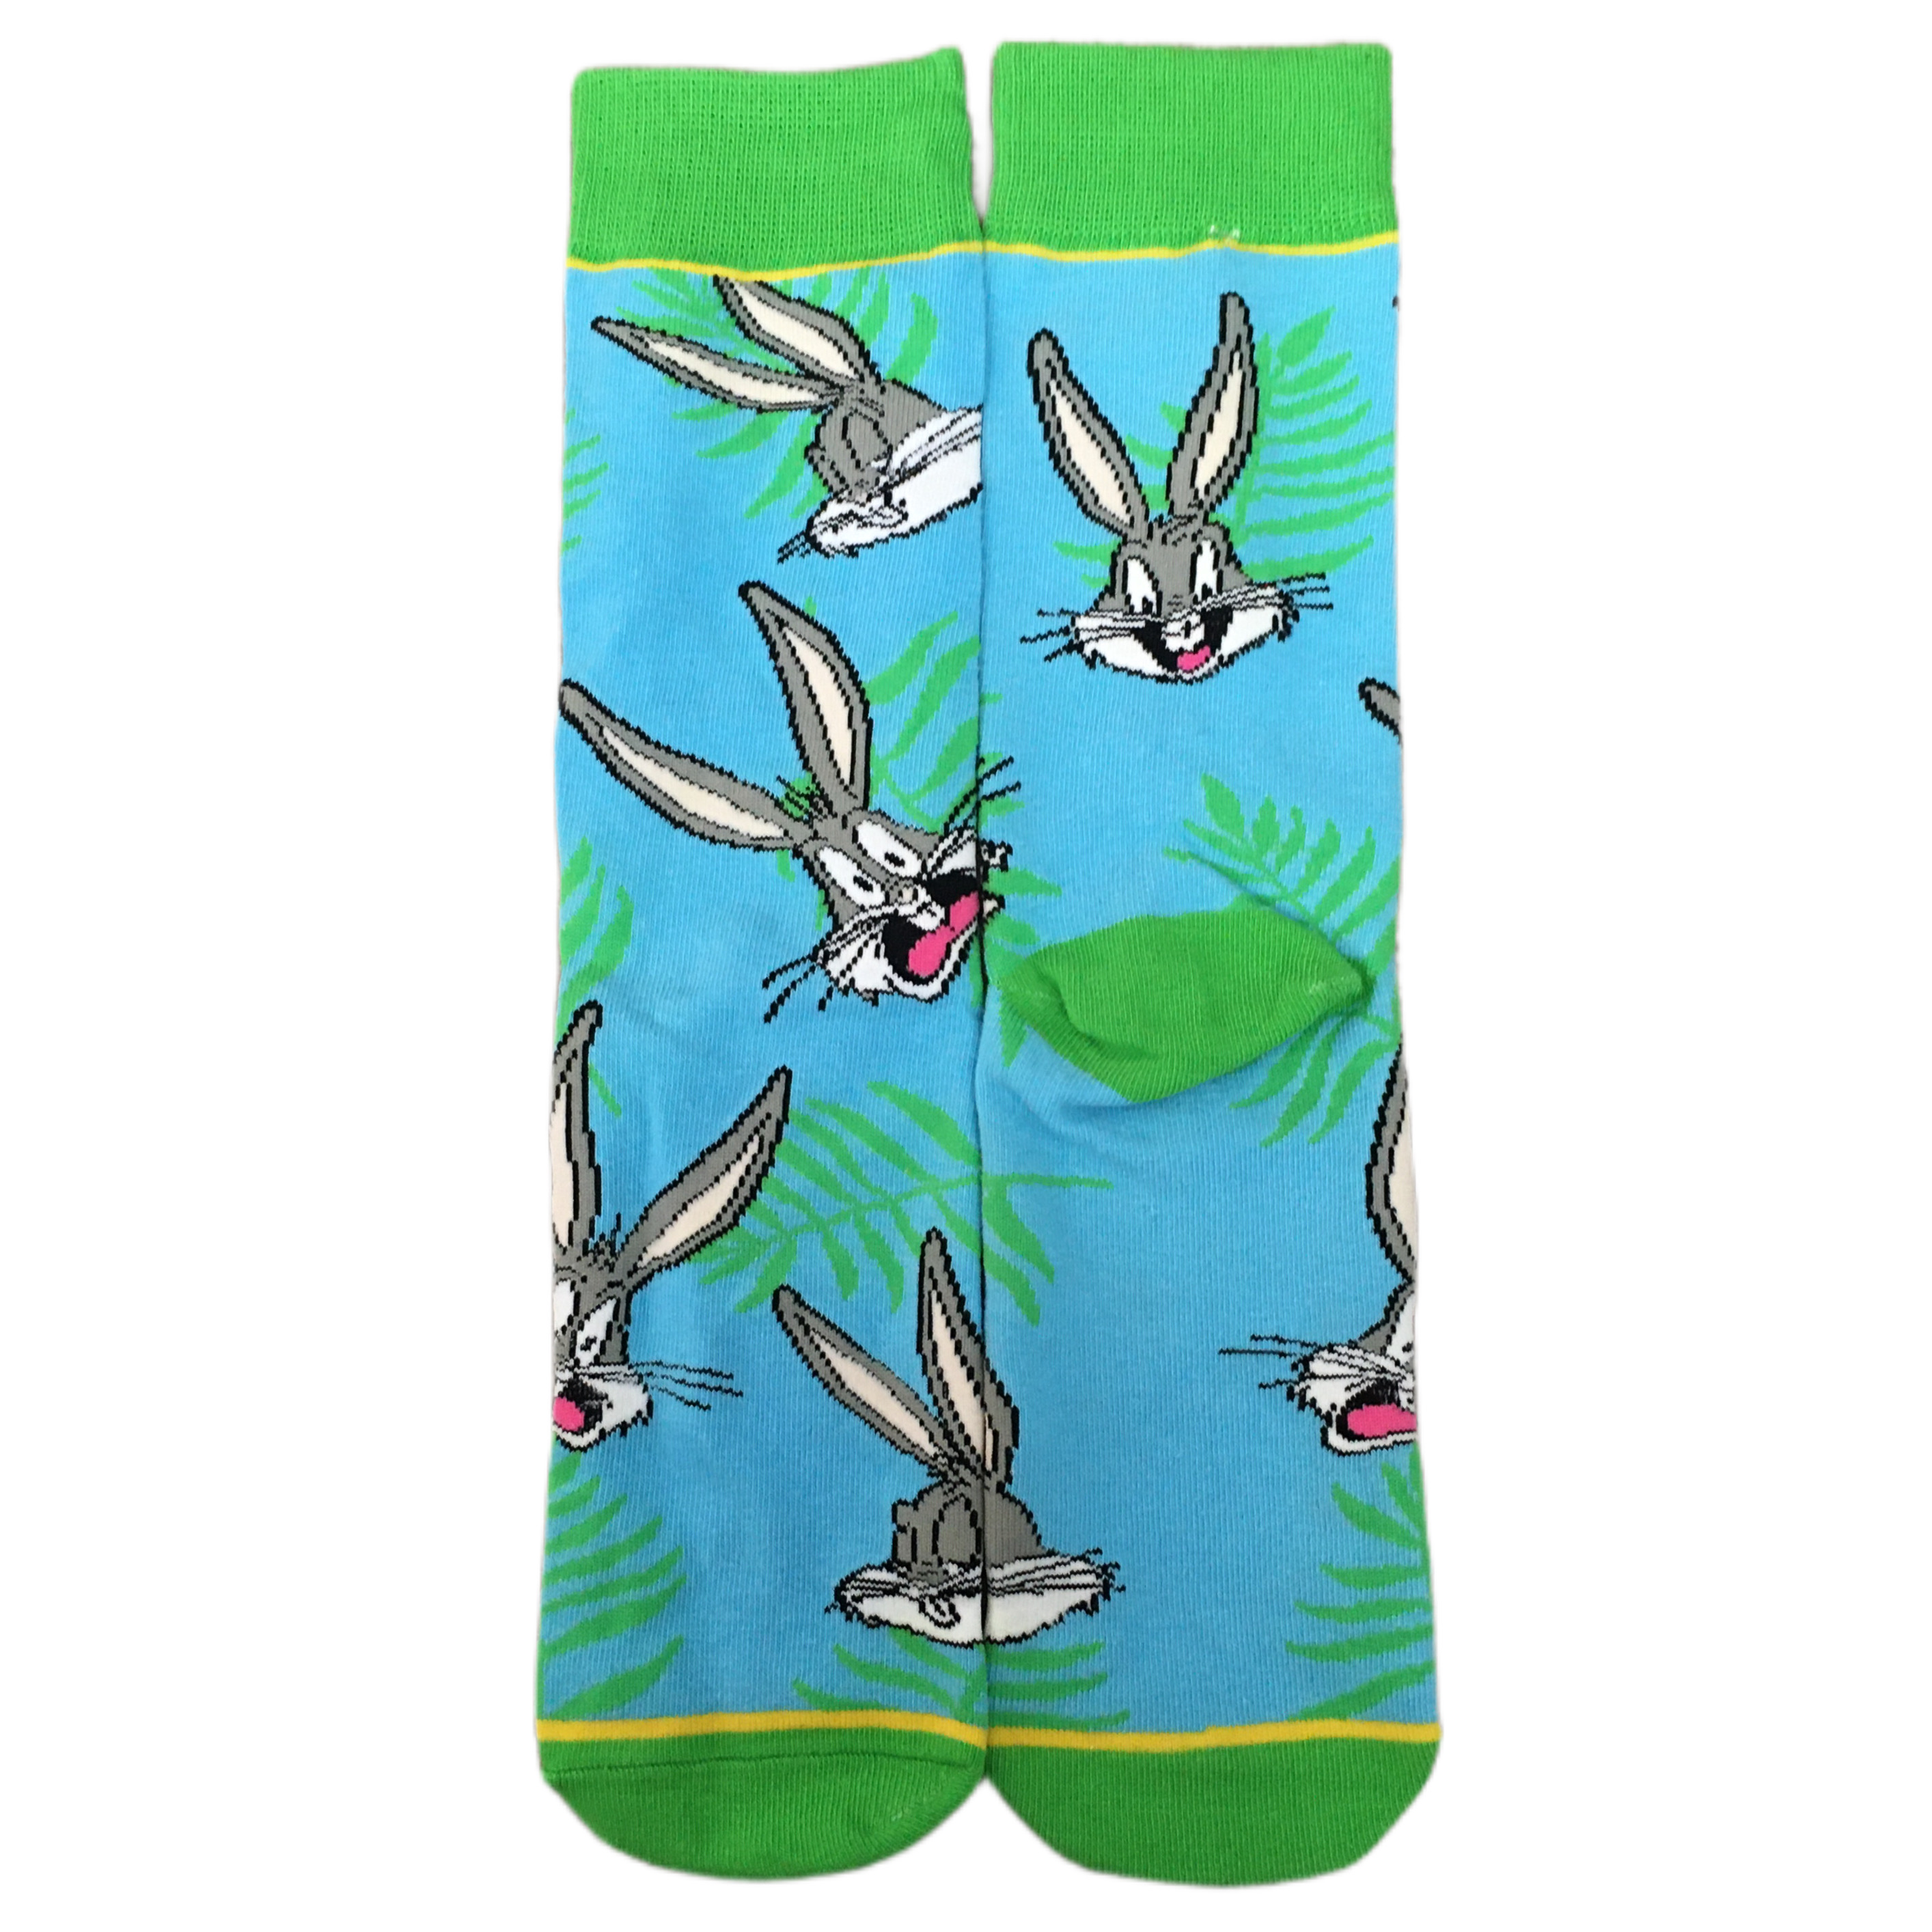 Bugs Bunny Socken 35-41